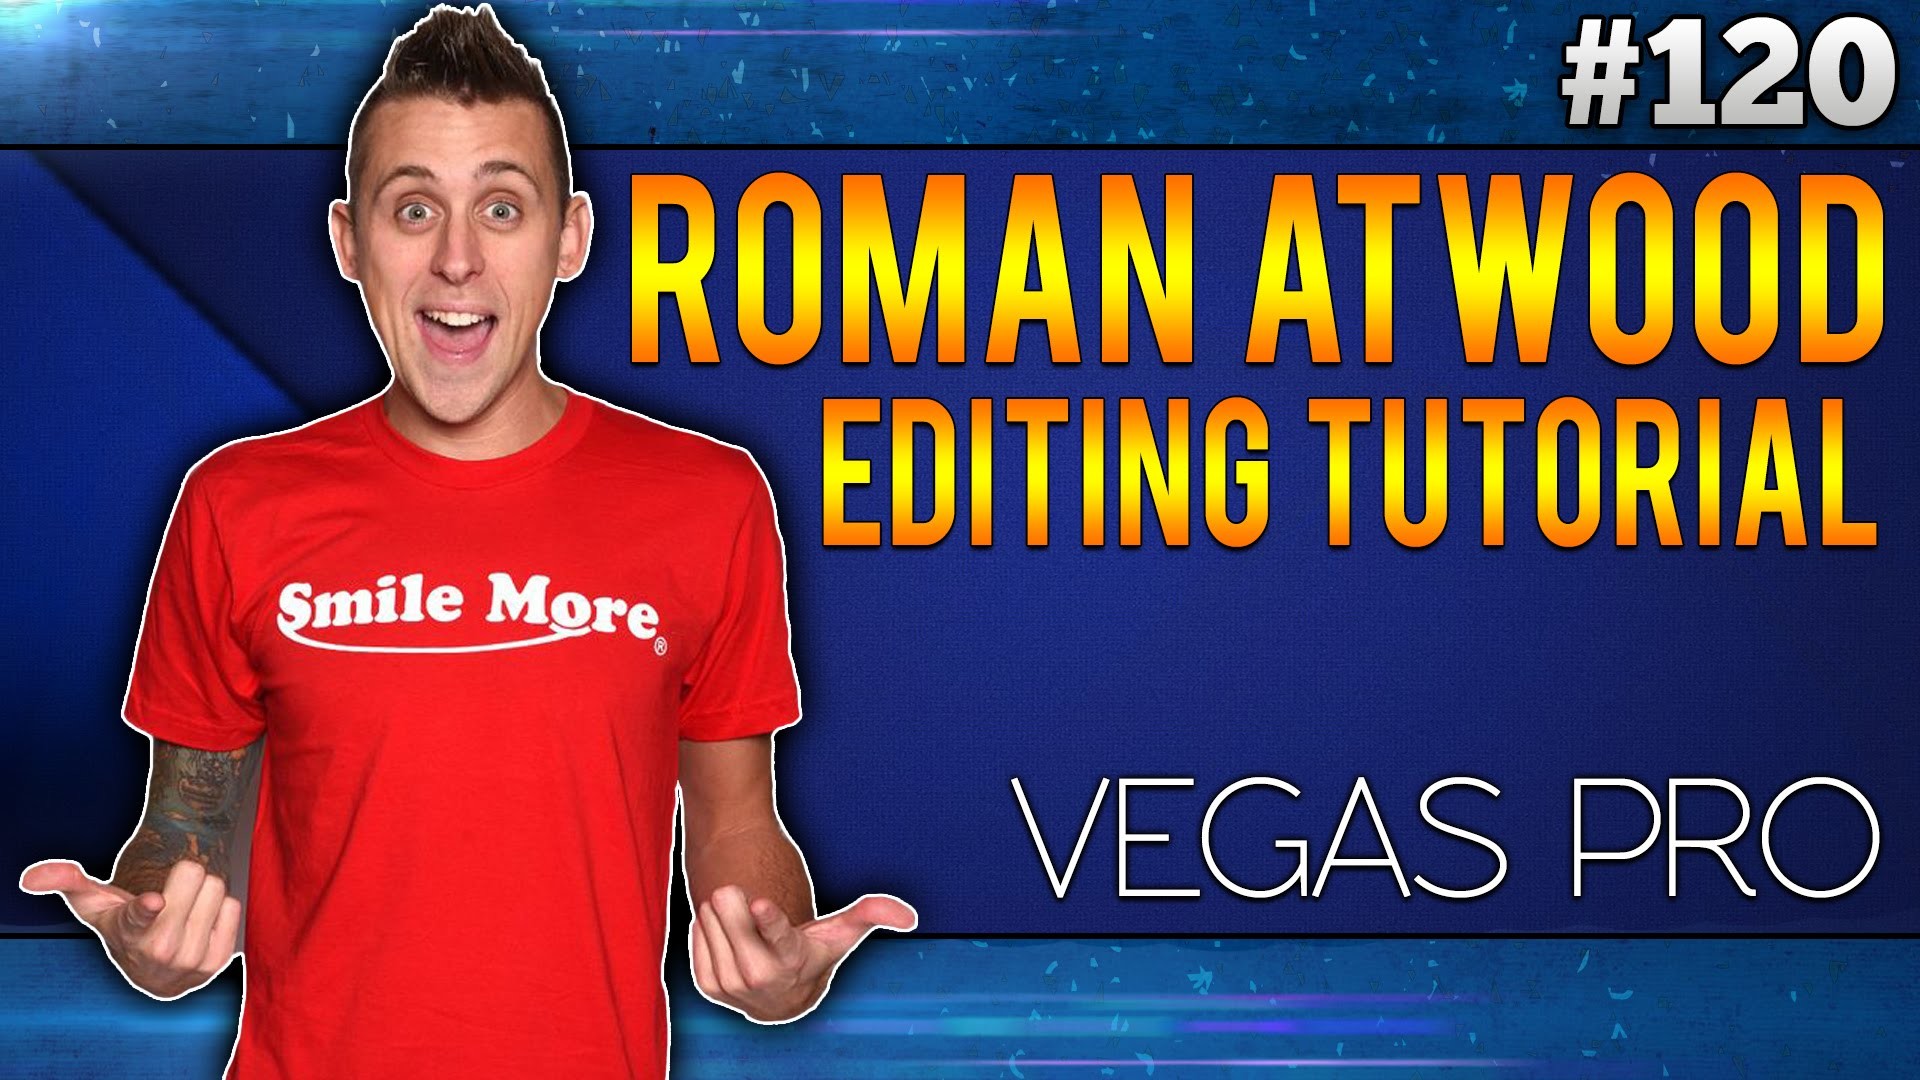 1920x1080 Sony Vegas Pro 13: How To Edit Vlogs Like Roman Atwood - Tutorial #120 -  YouTube